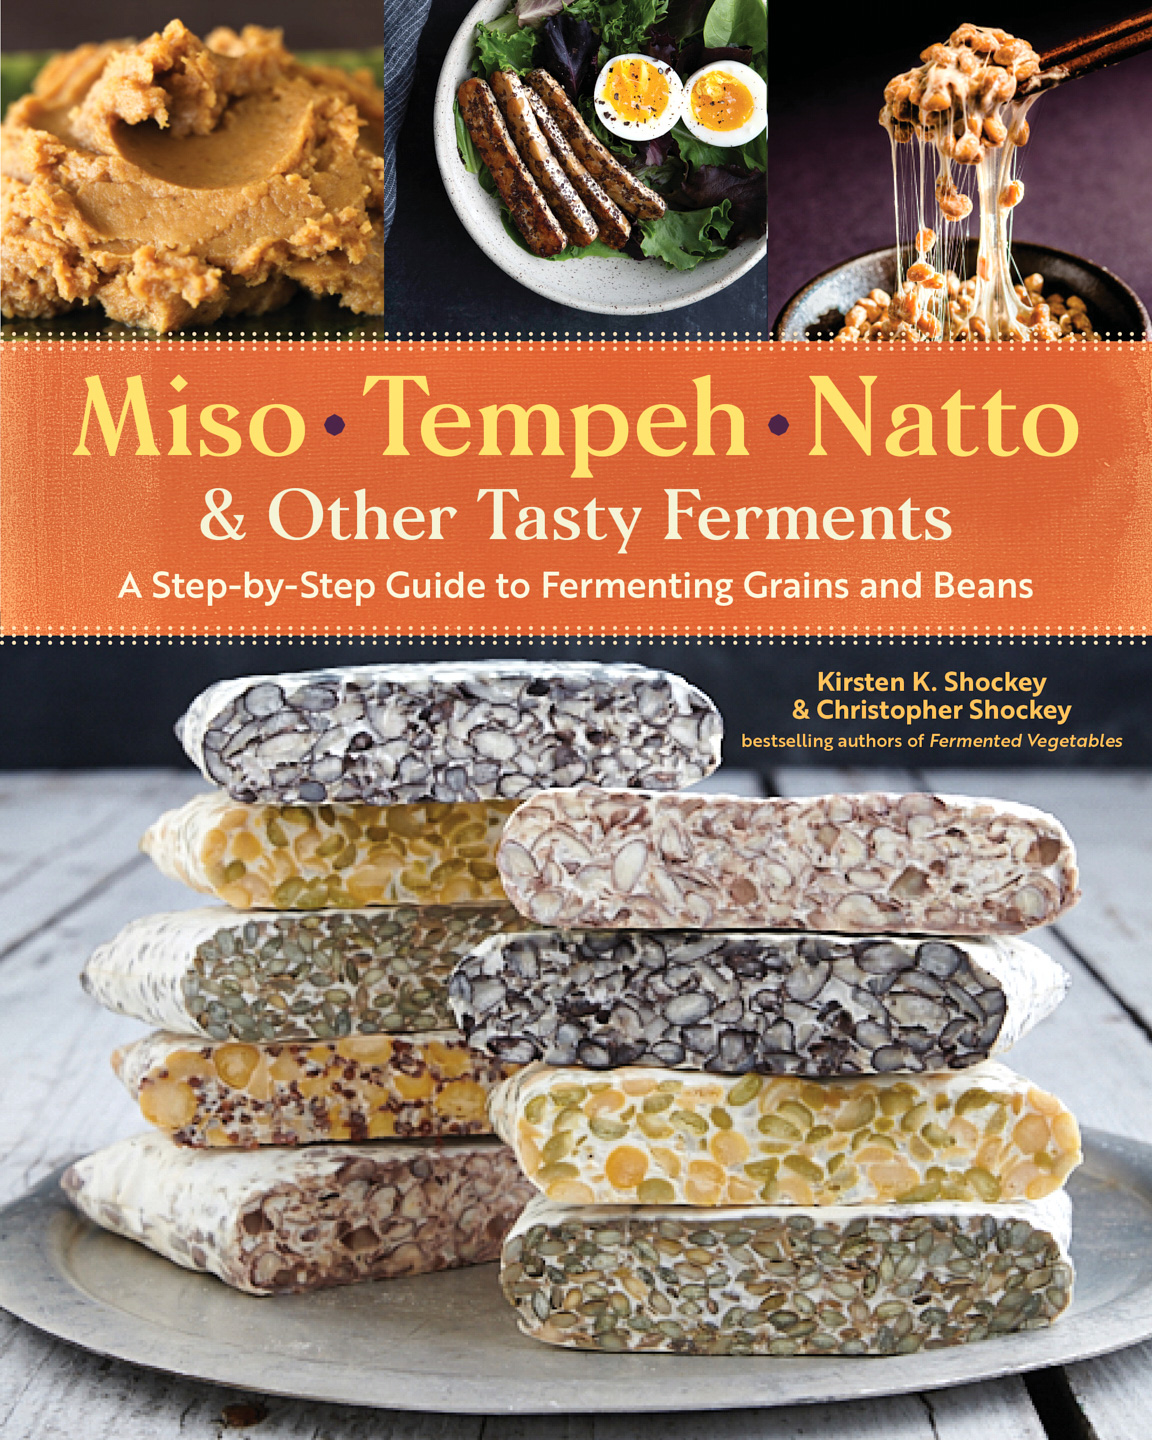 commercial-food-photographer-cookbook-miso-tempeh-natto-cover-portland-oregon